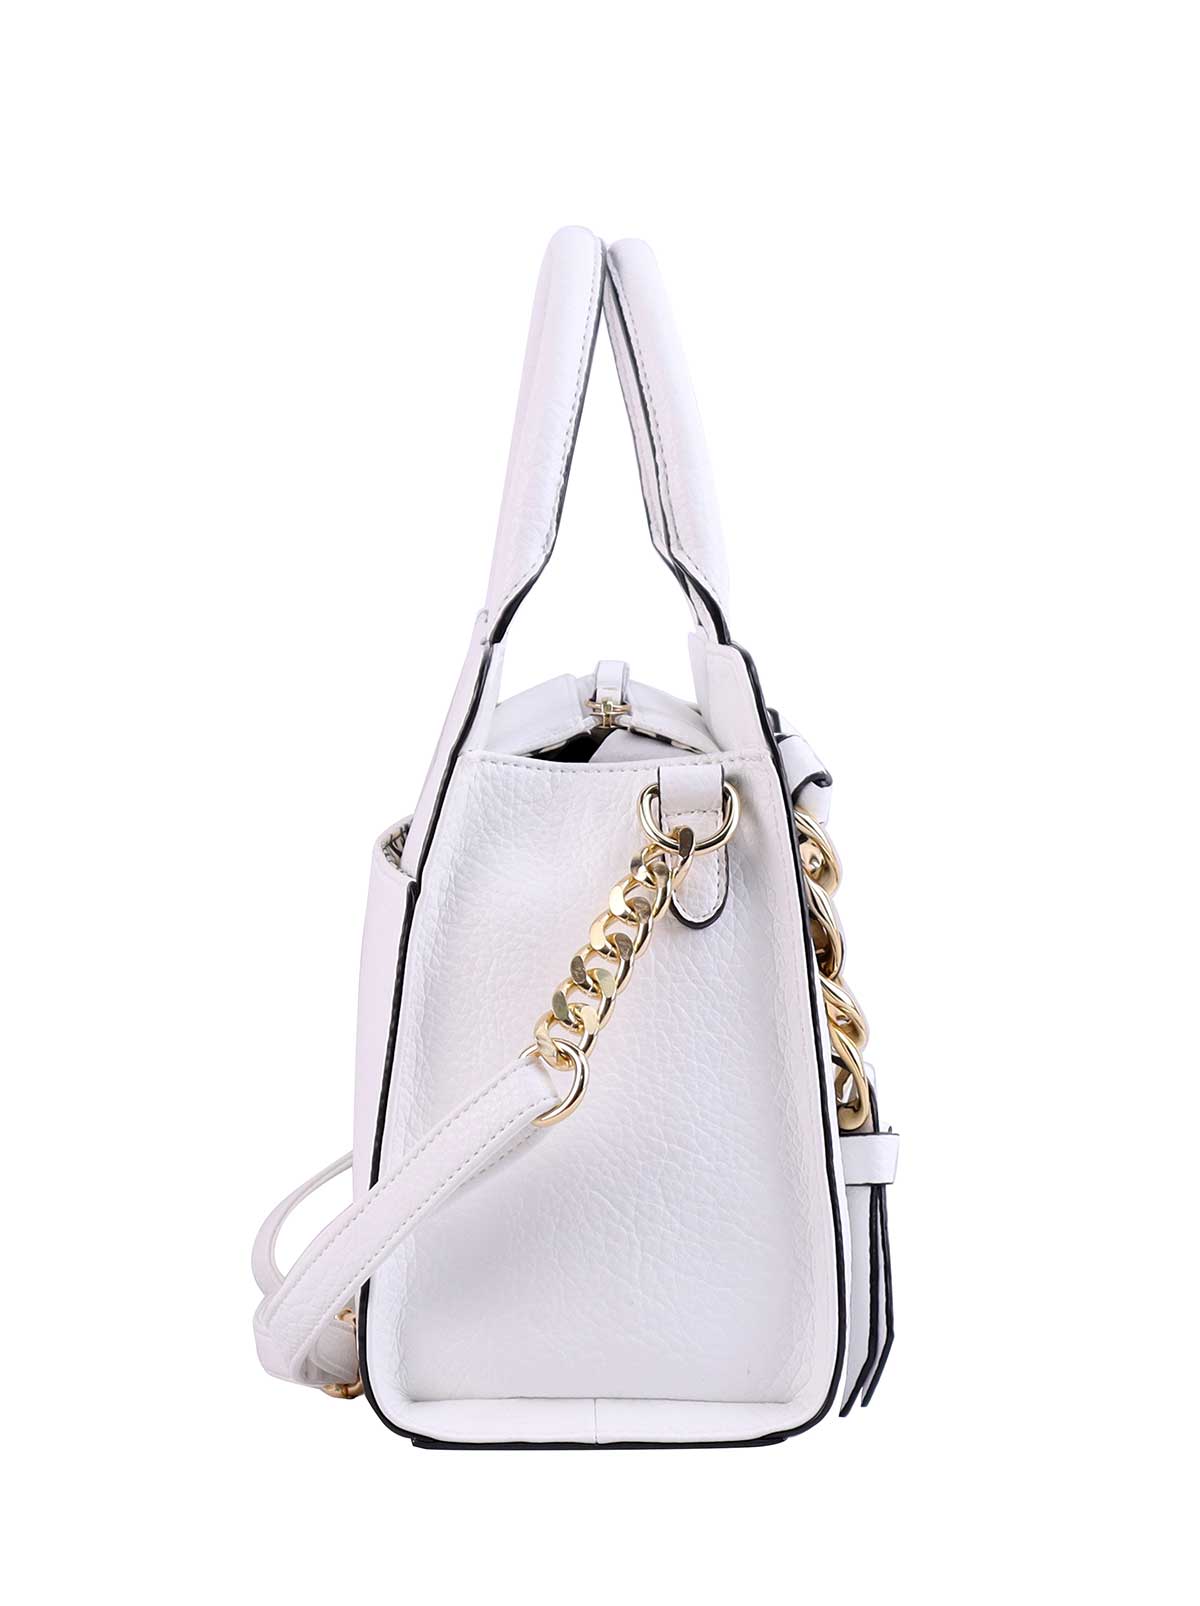 Jessica Simpson White Leather Purse | Leather purses, White leather, Leather